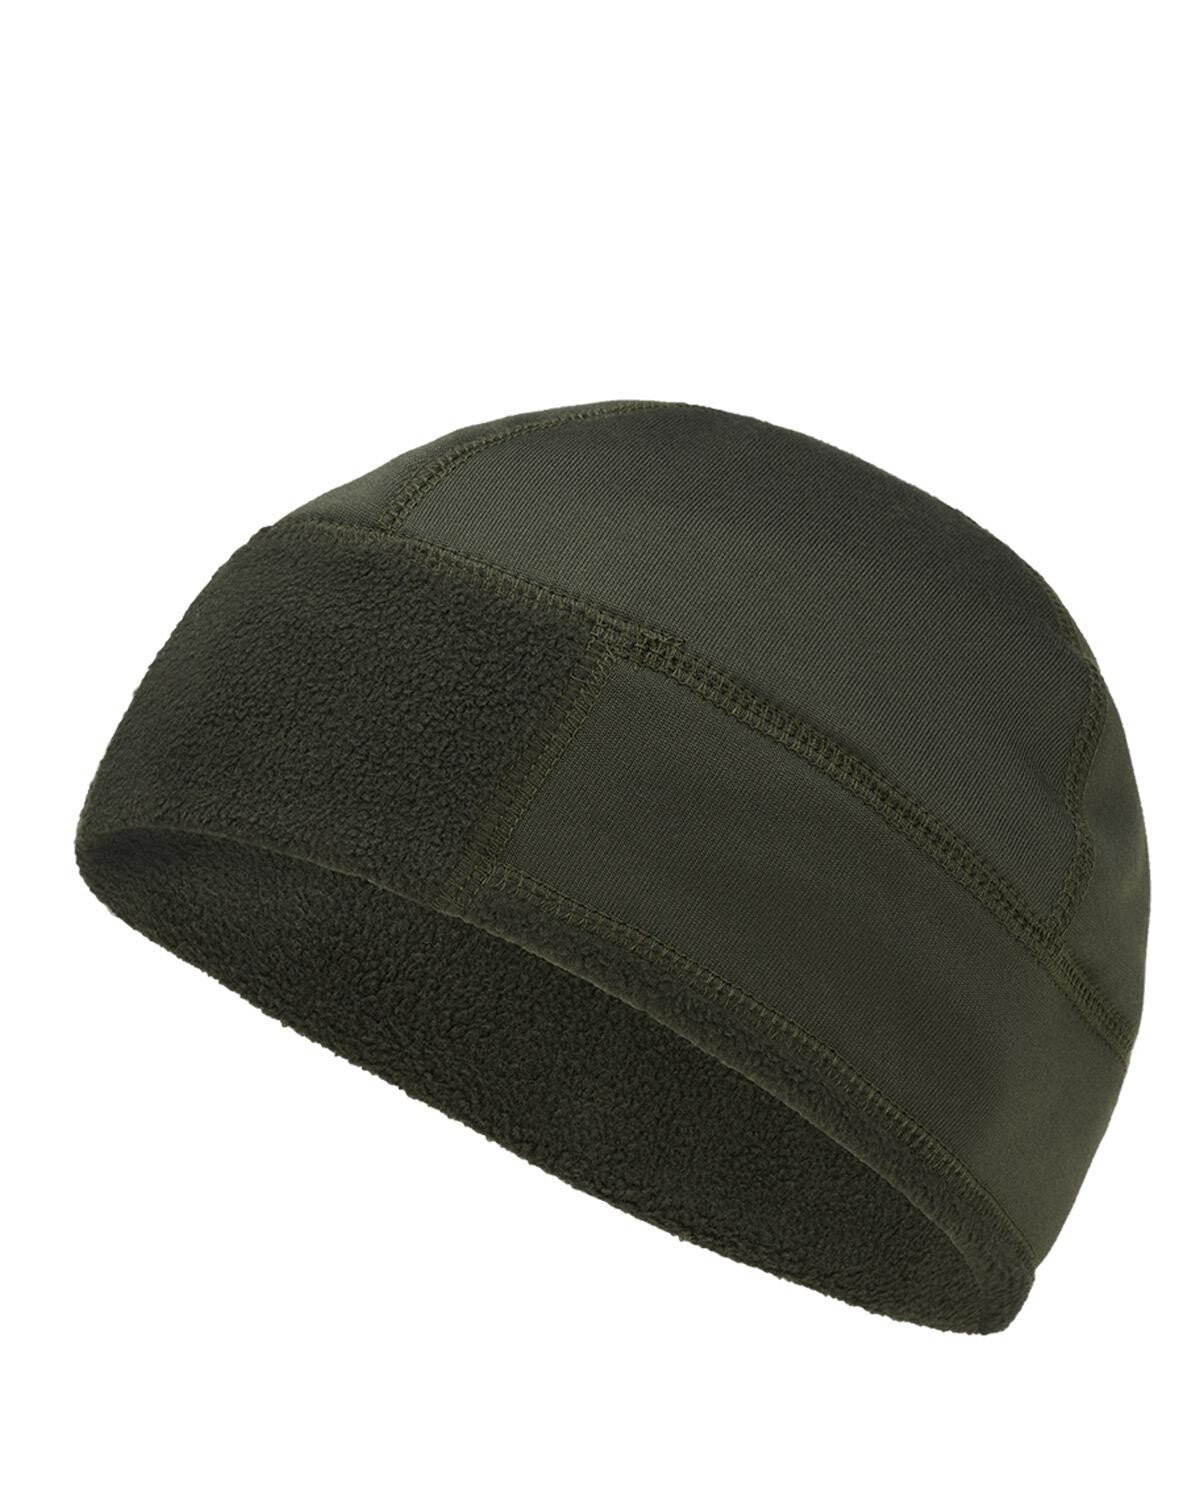 Brandit BW Fleece Cap (Oliven, One Size)